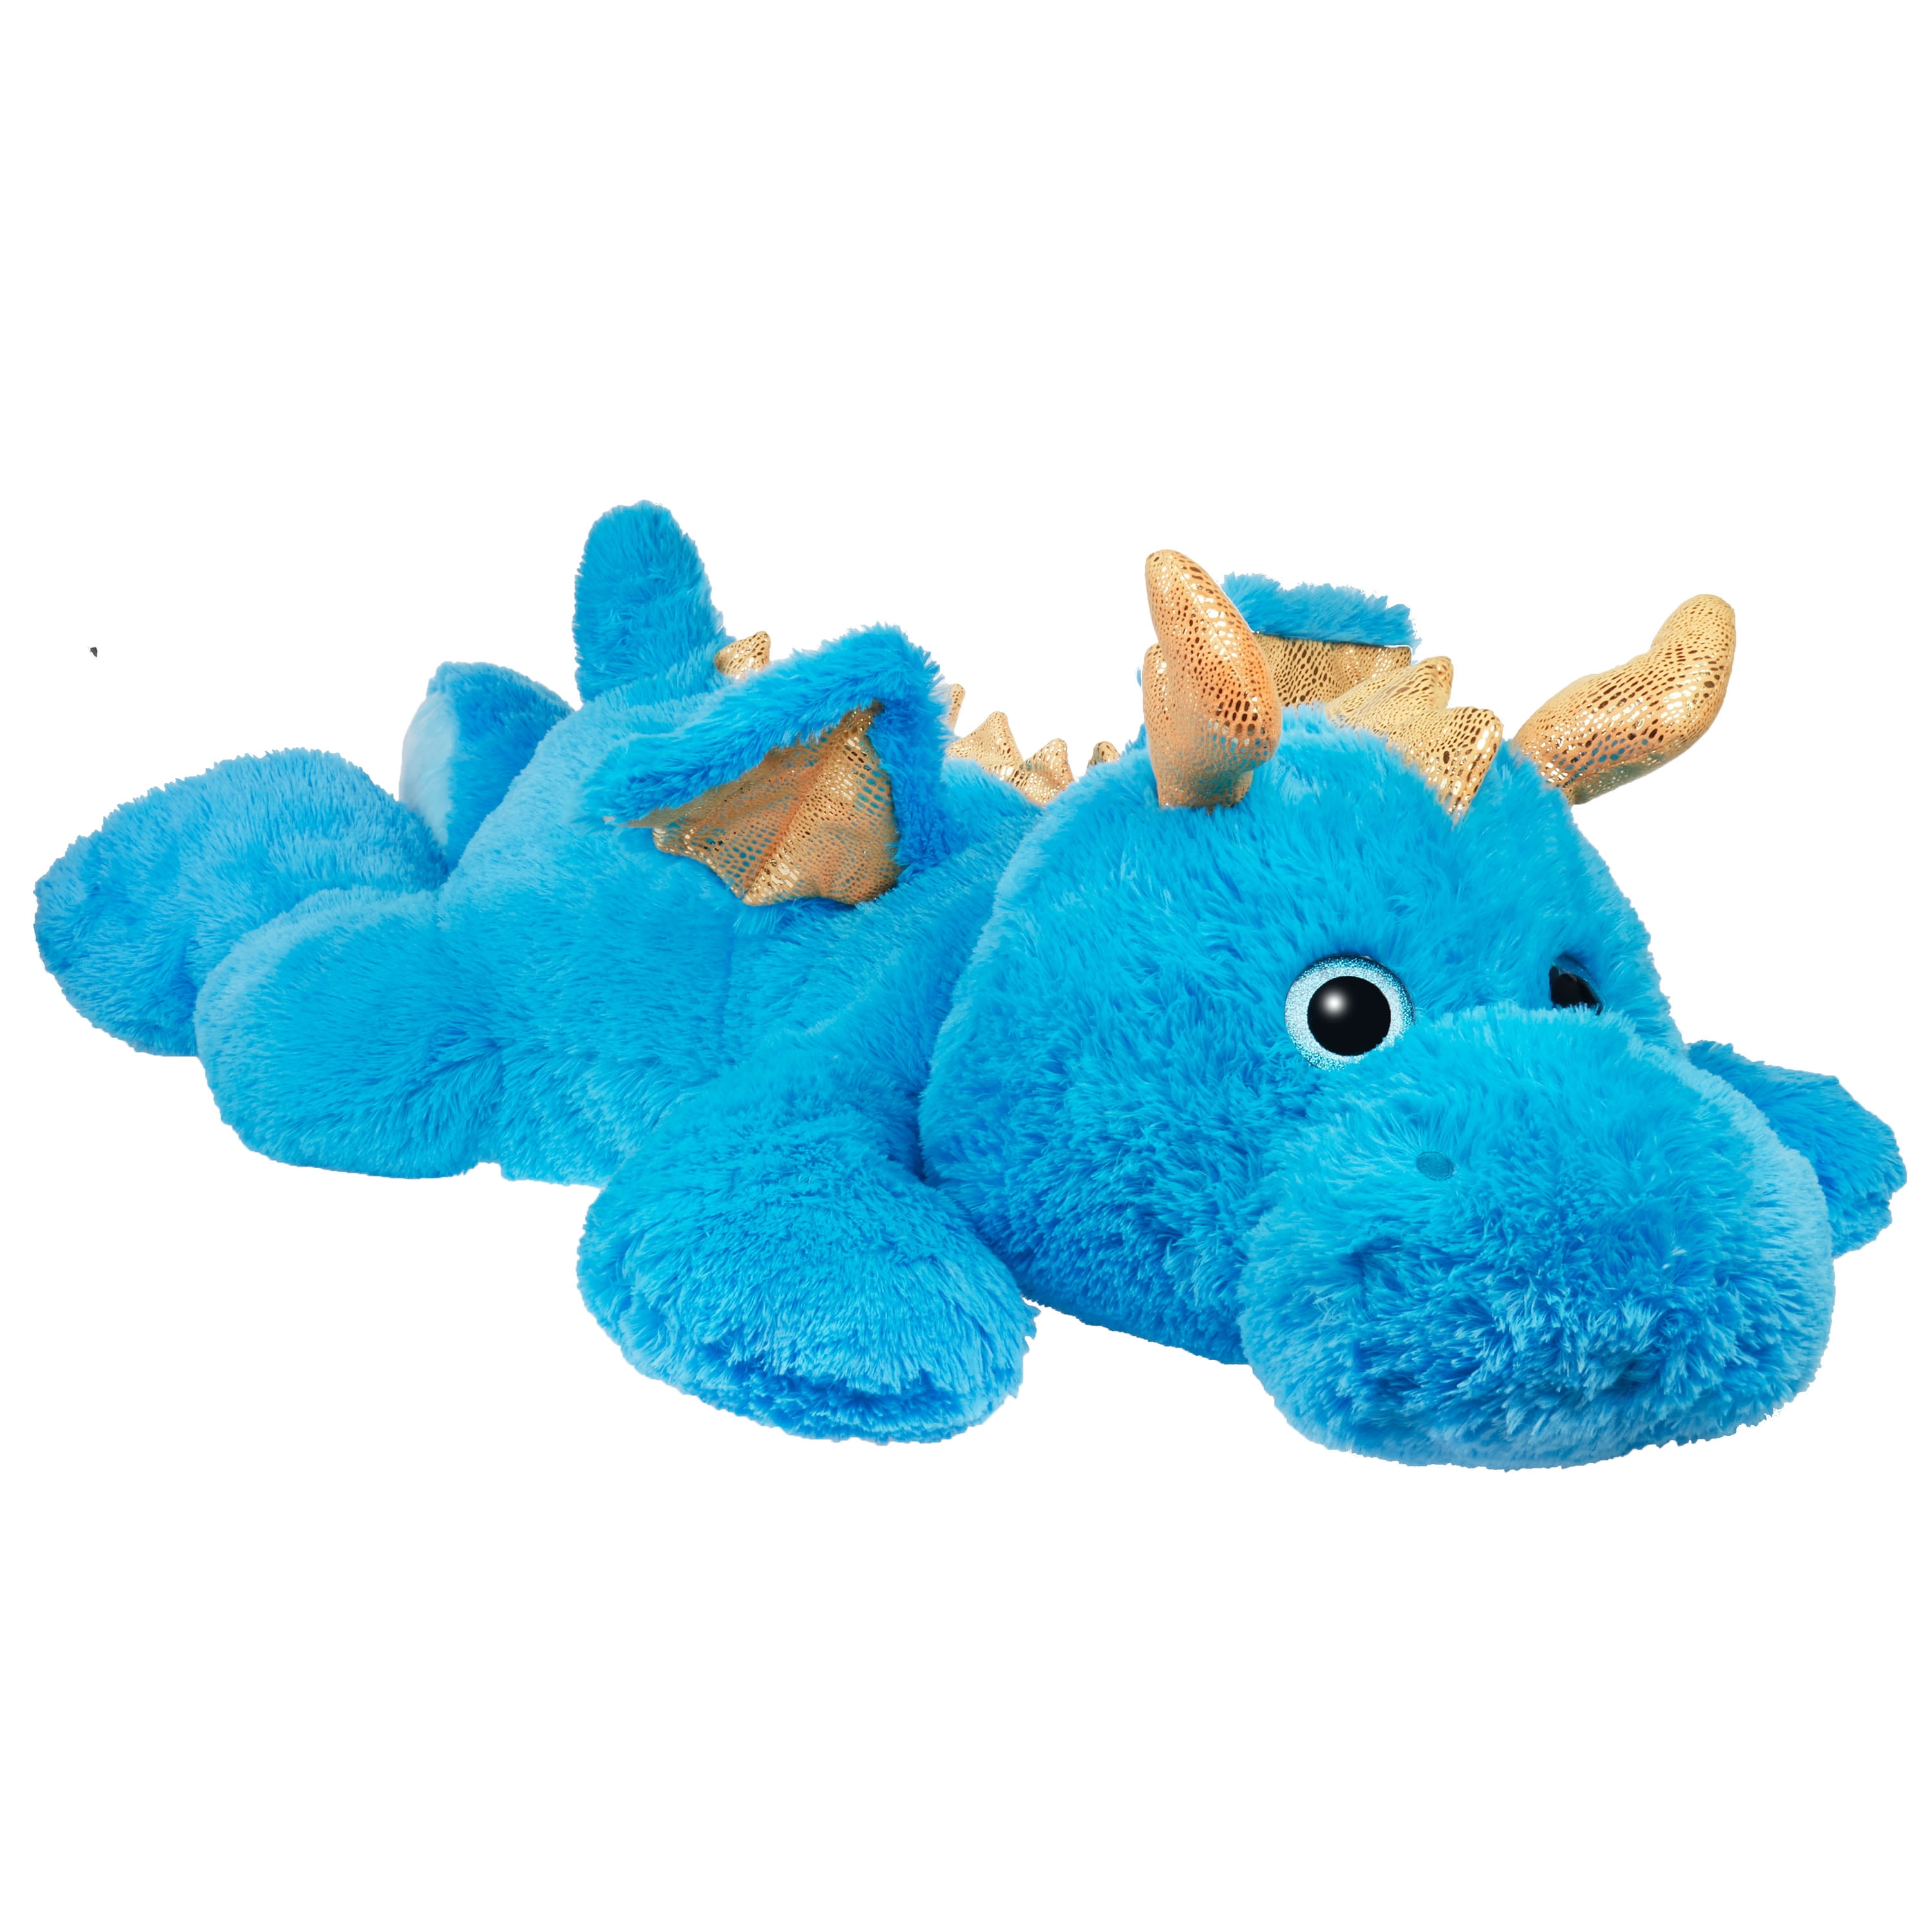 Cascade the Blue Mini Stuffed Dragon